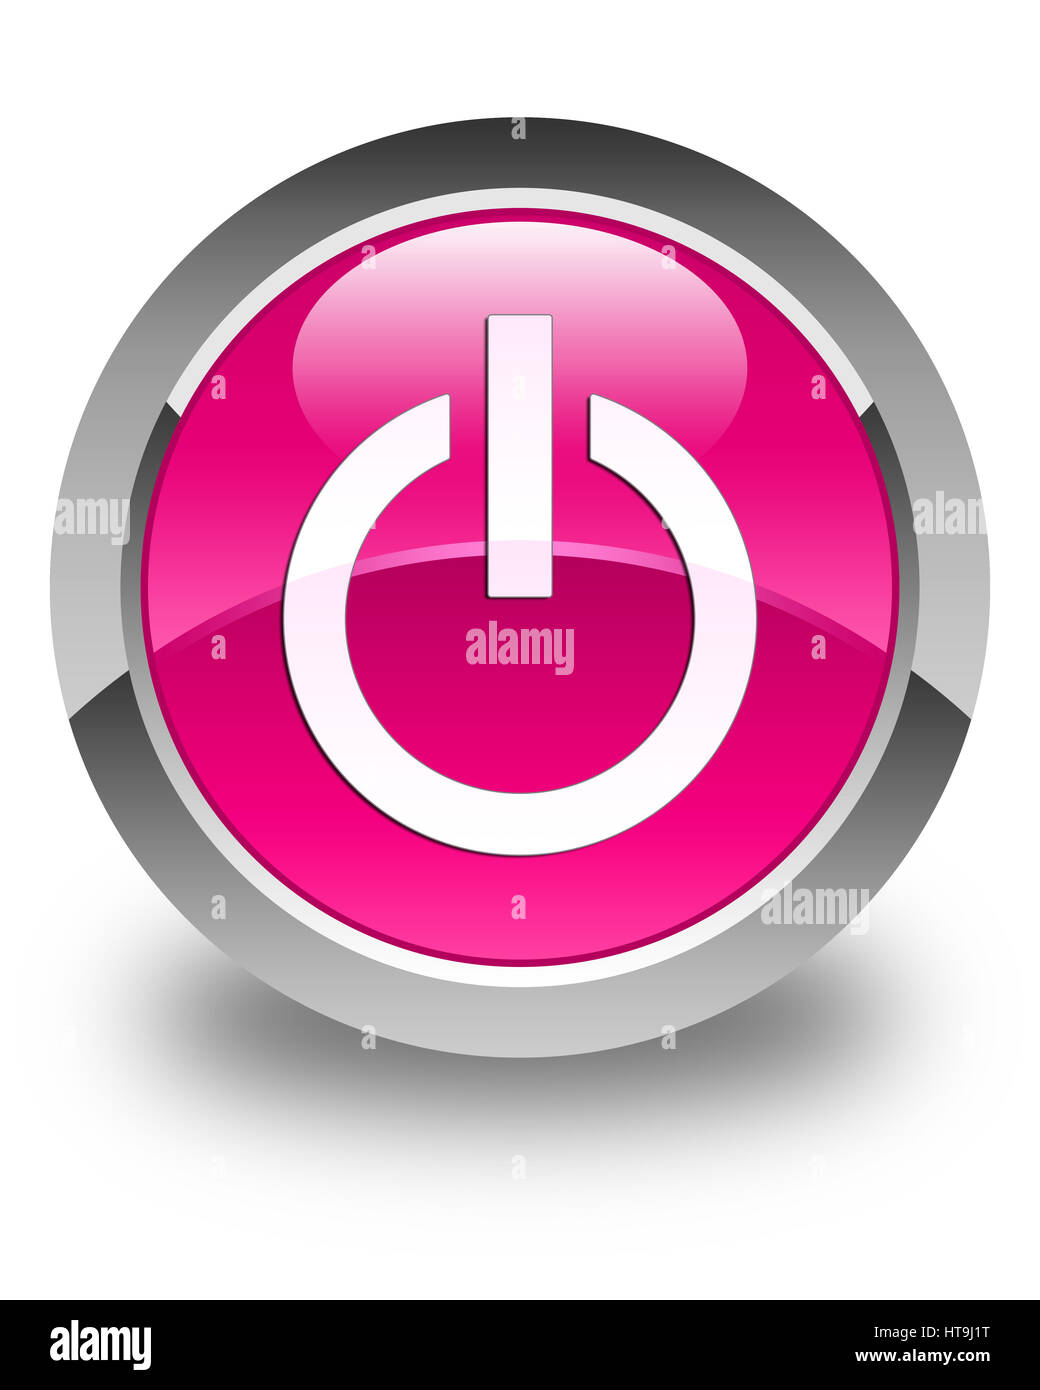 Icône d'alimentation isolé sur bouton rond rose brillant abstract illustration Banque D'Images